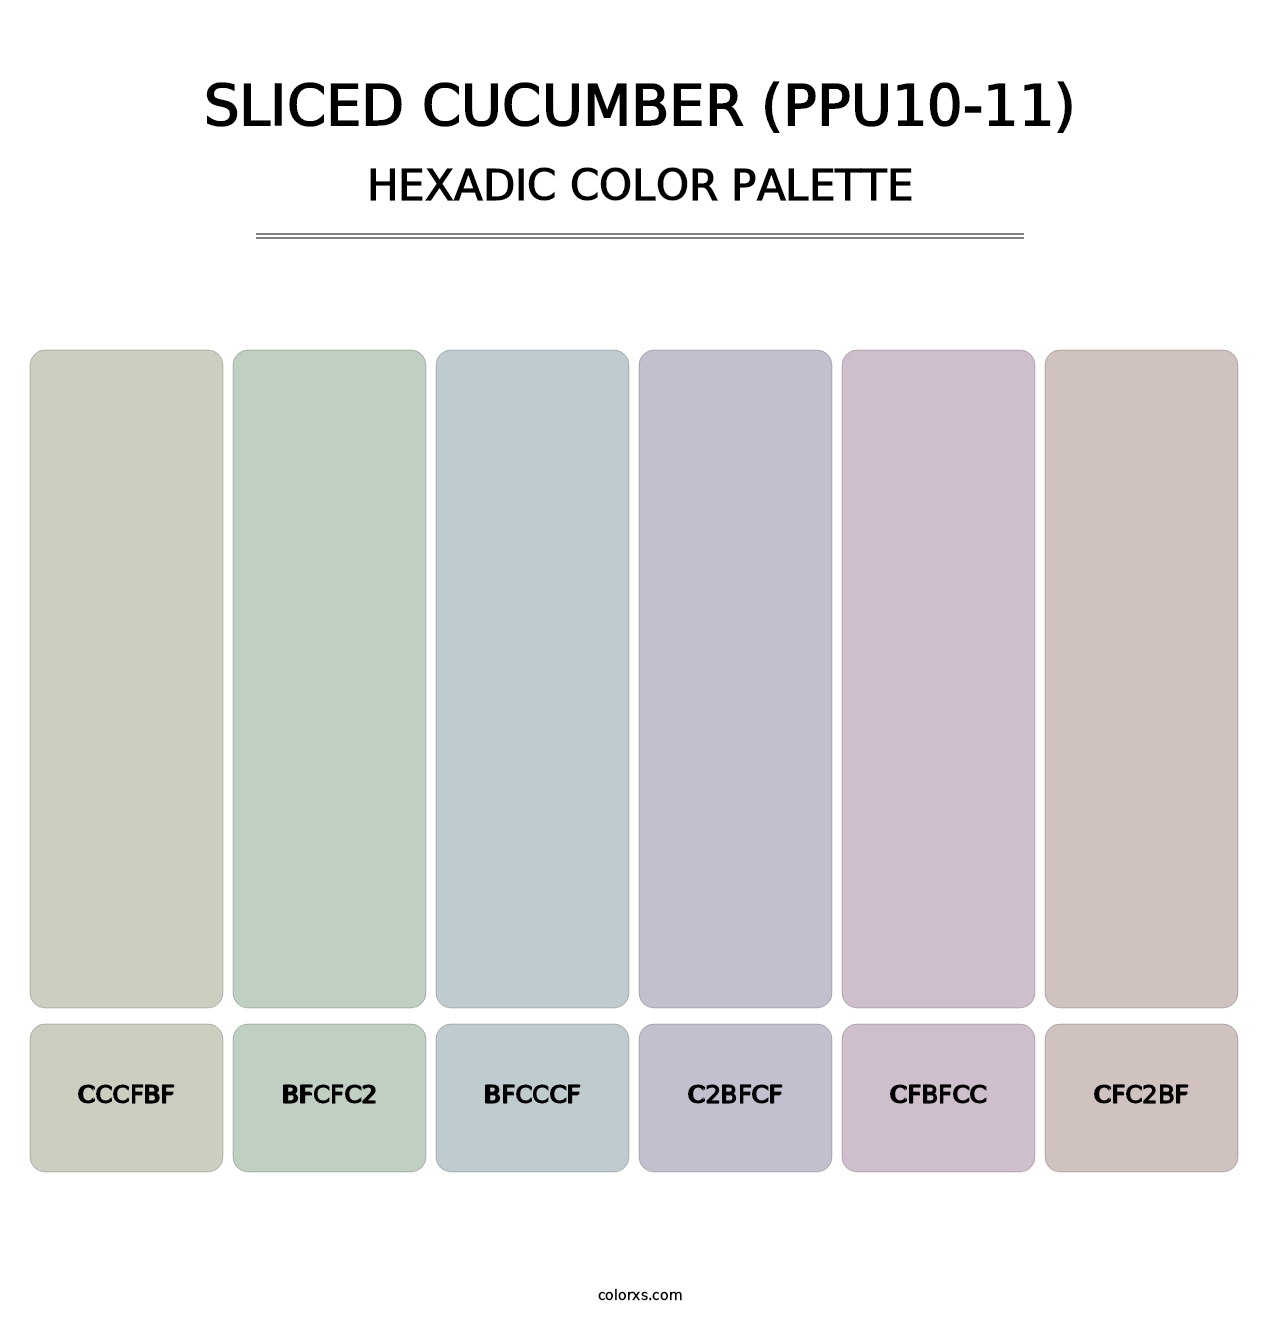 Sliced Cucumber (PPU10-11) - Hexadic Color Palette